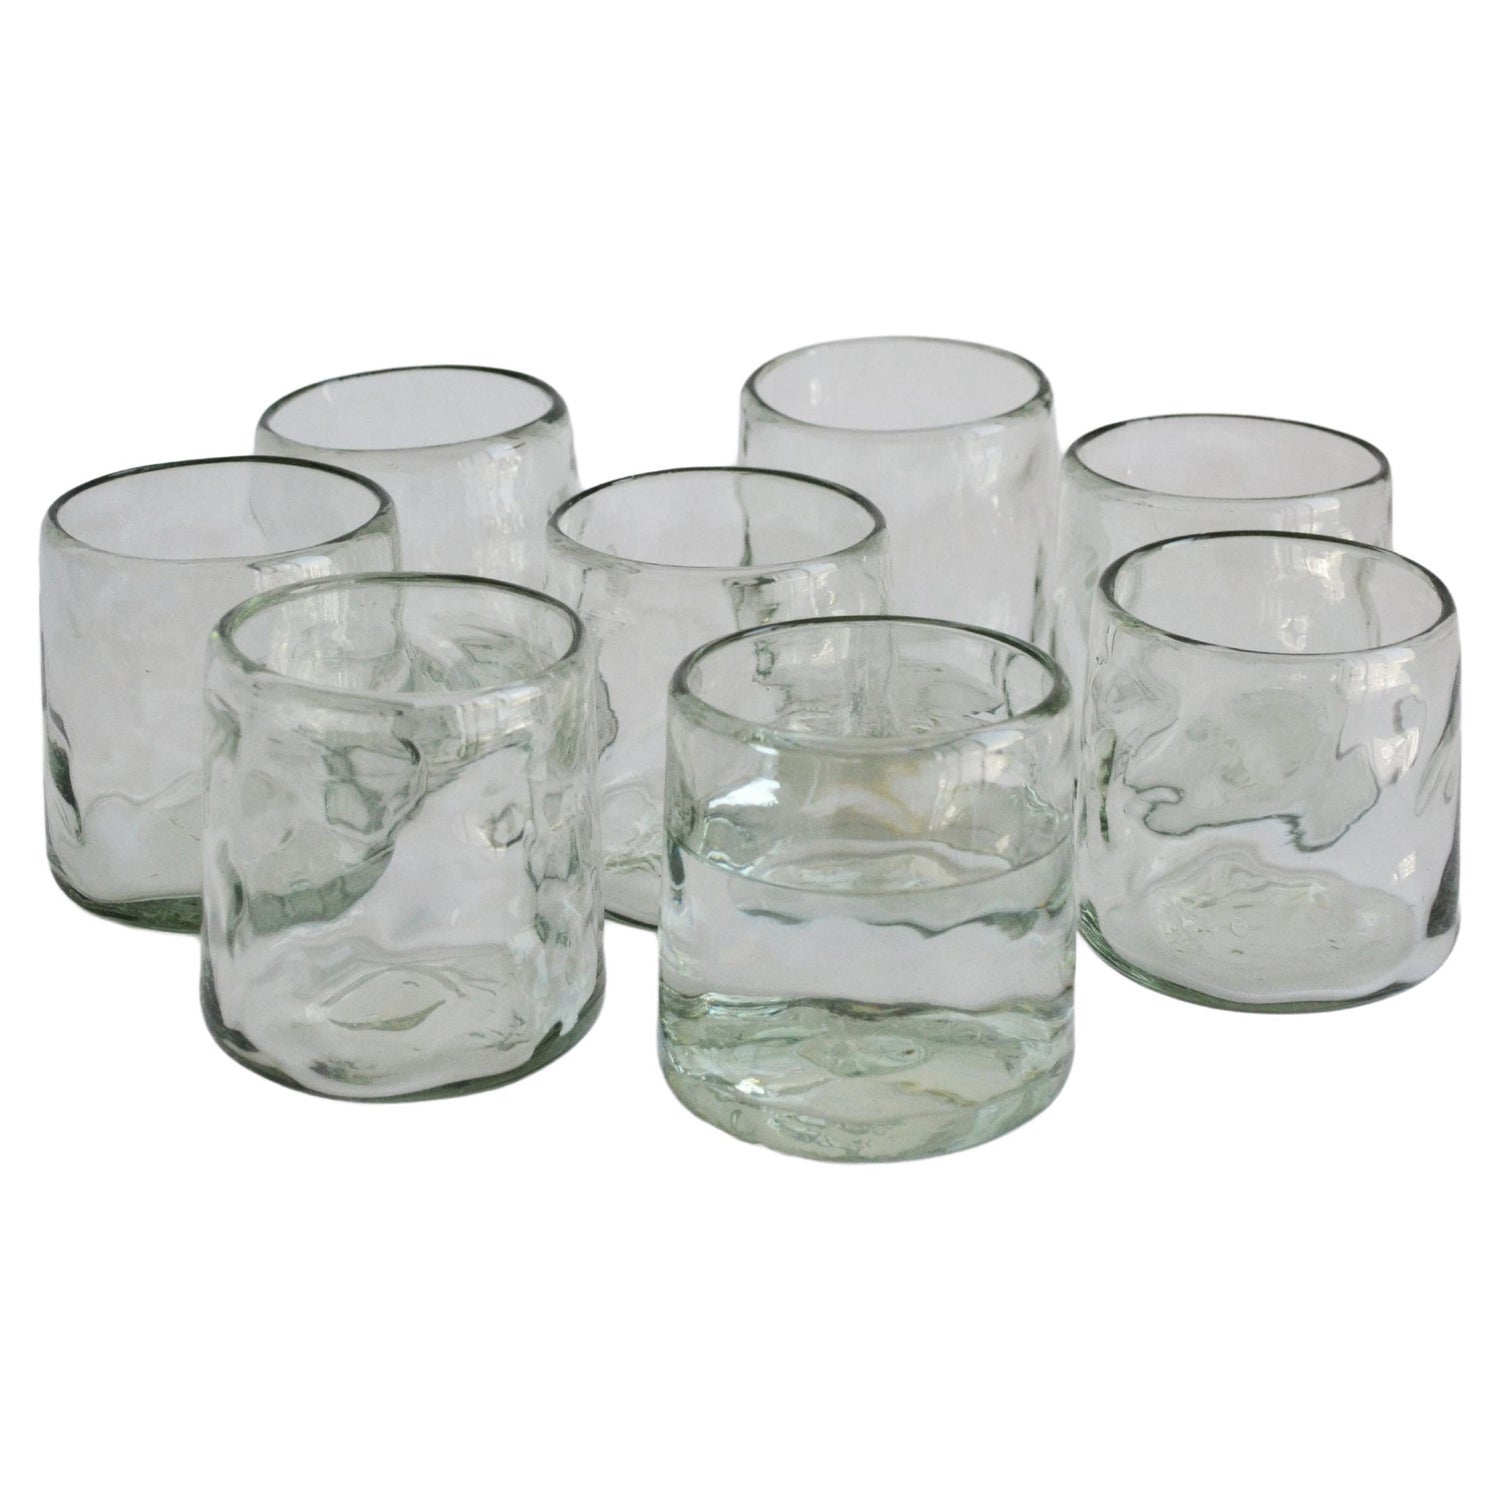 https://a.1stdibscdn.com/8-cocktail-tumblers-handblown-organic-irregular-shape-100-recycled-glass-for-sale/f_60172/f_274668221645408014407/f_27466822_1645408015193_bg_processed.jpg?width=1500